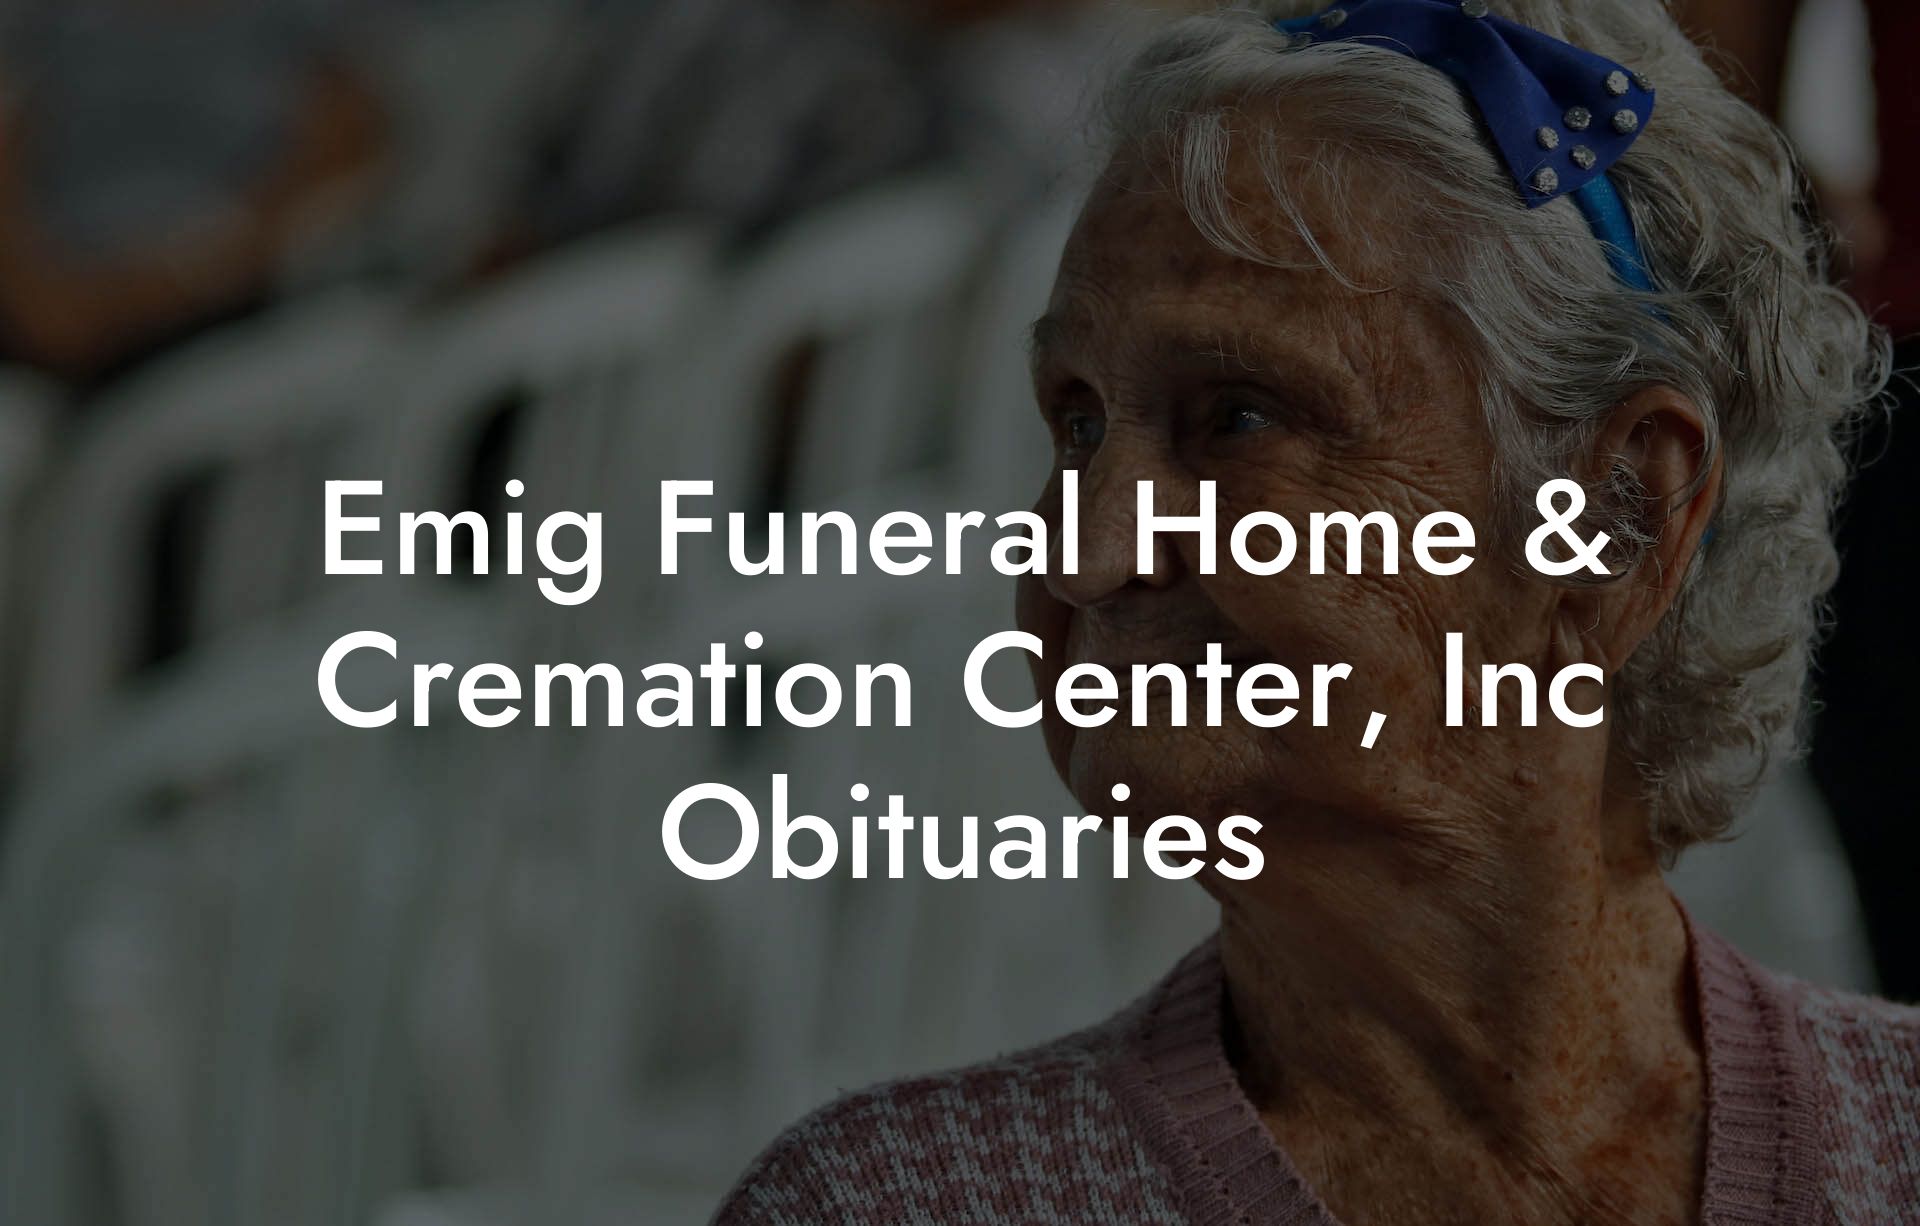 Emig Funeral Home & Cremation Center, Inc Obituaries